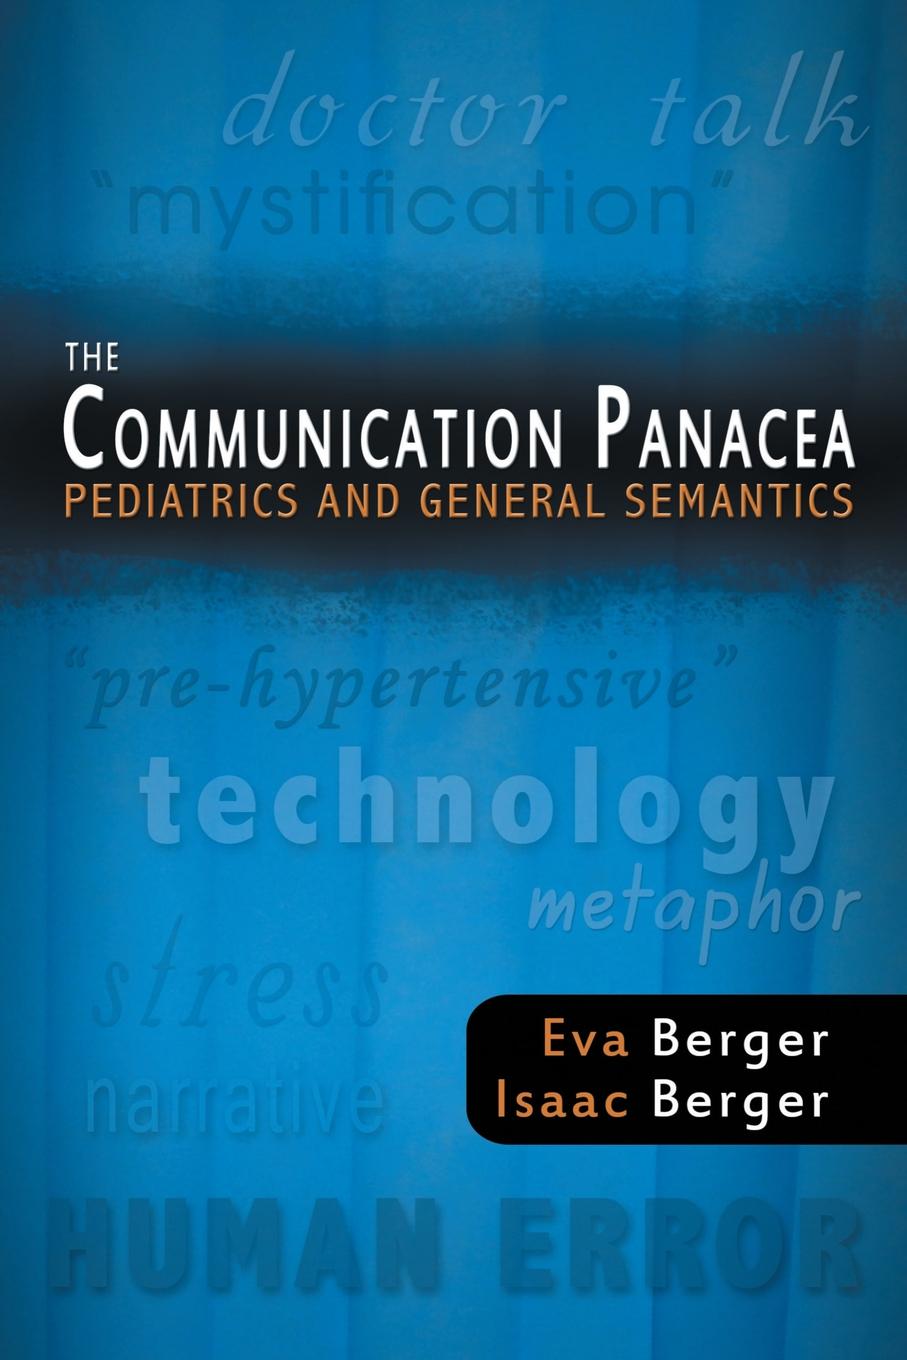 The Communication Panacea: Pediatrics and General Semantics